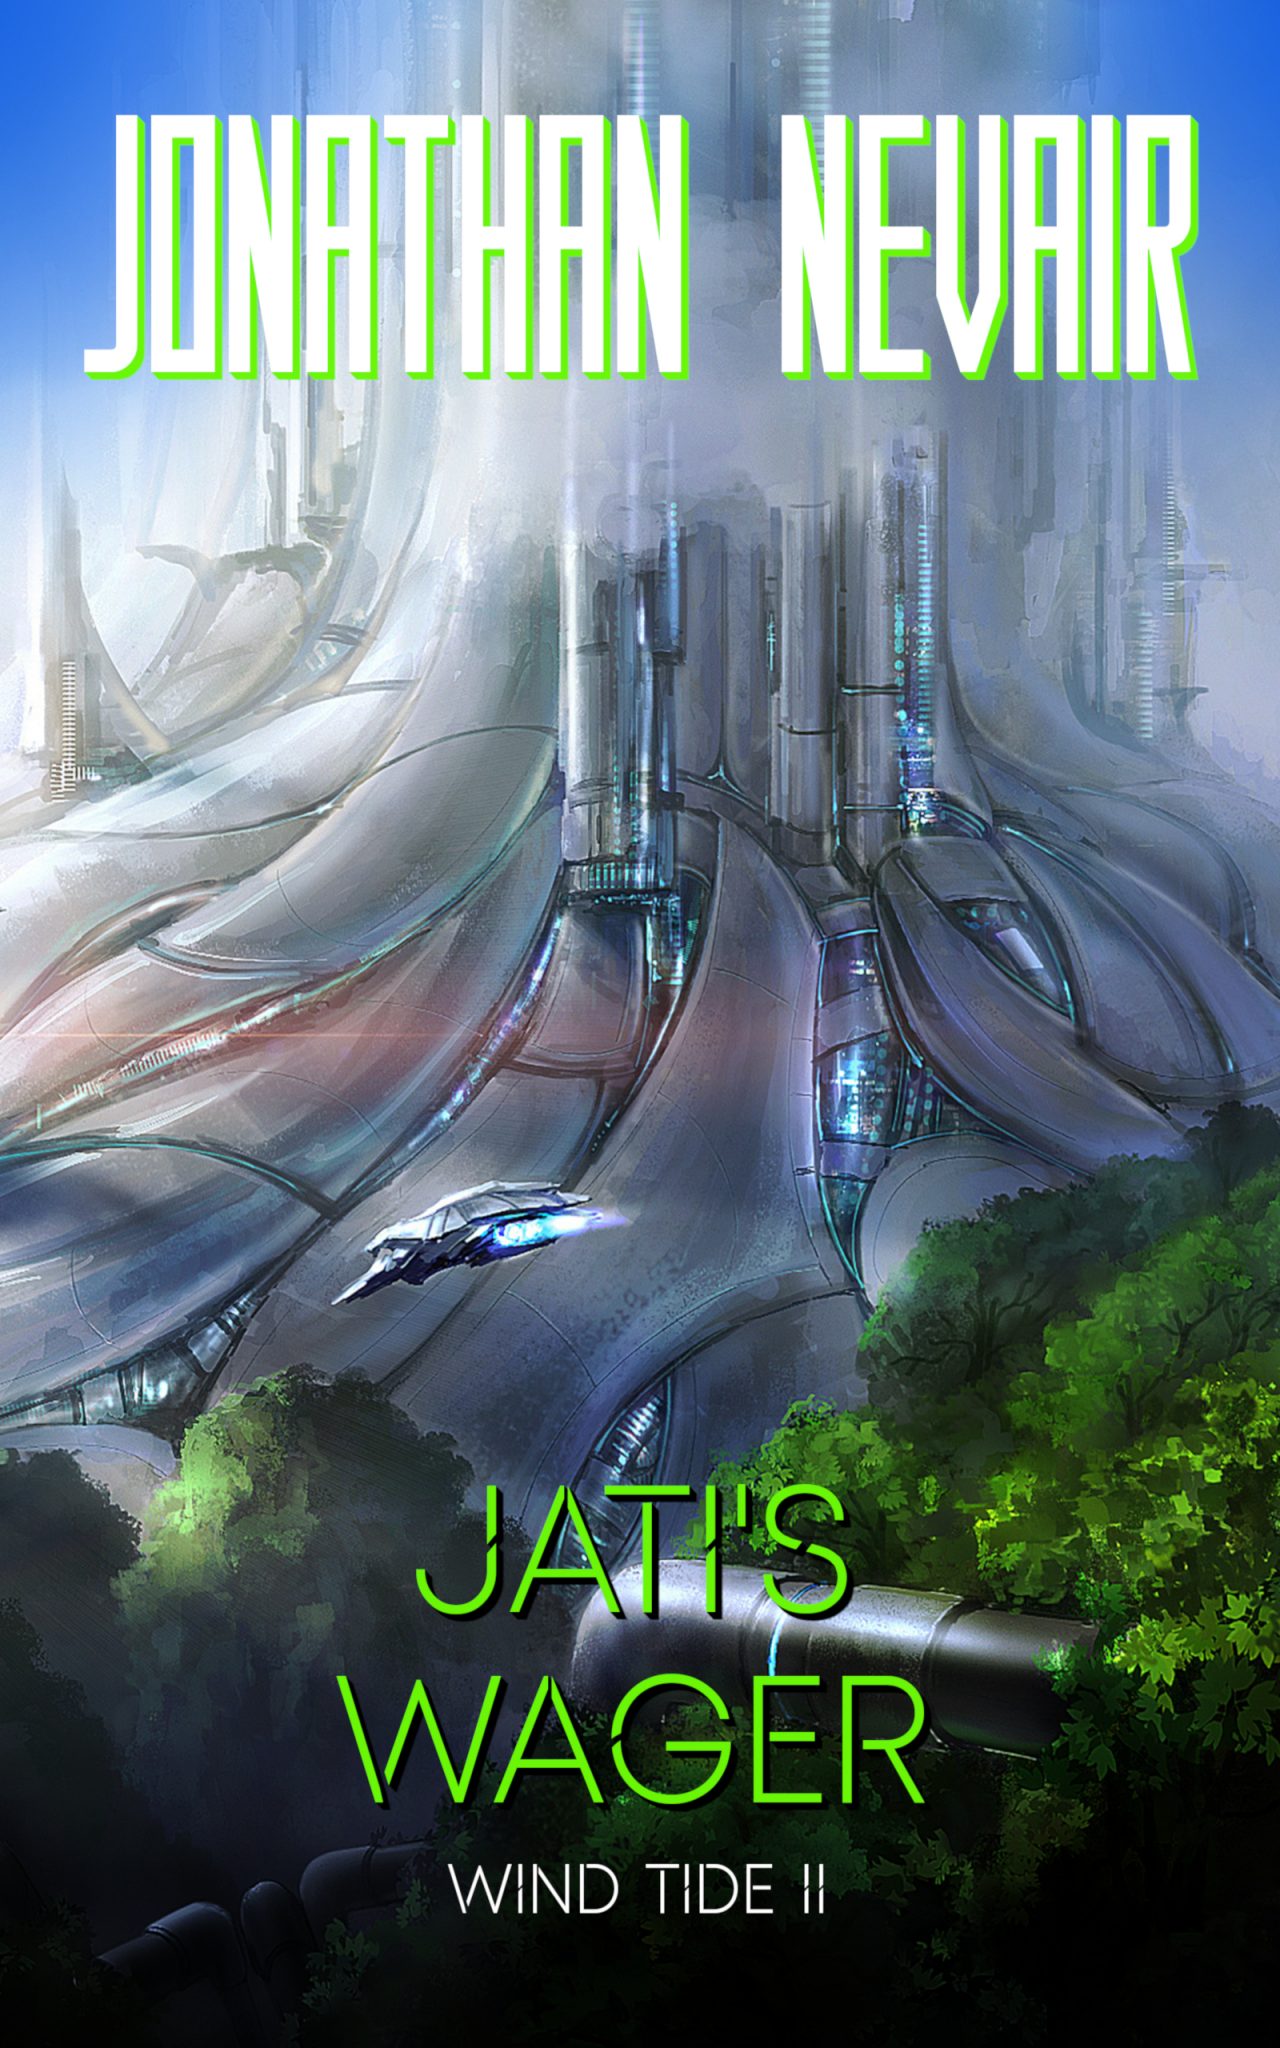 Jati's Wager by Jonathan Nevair